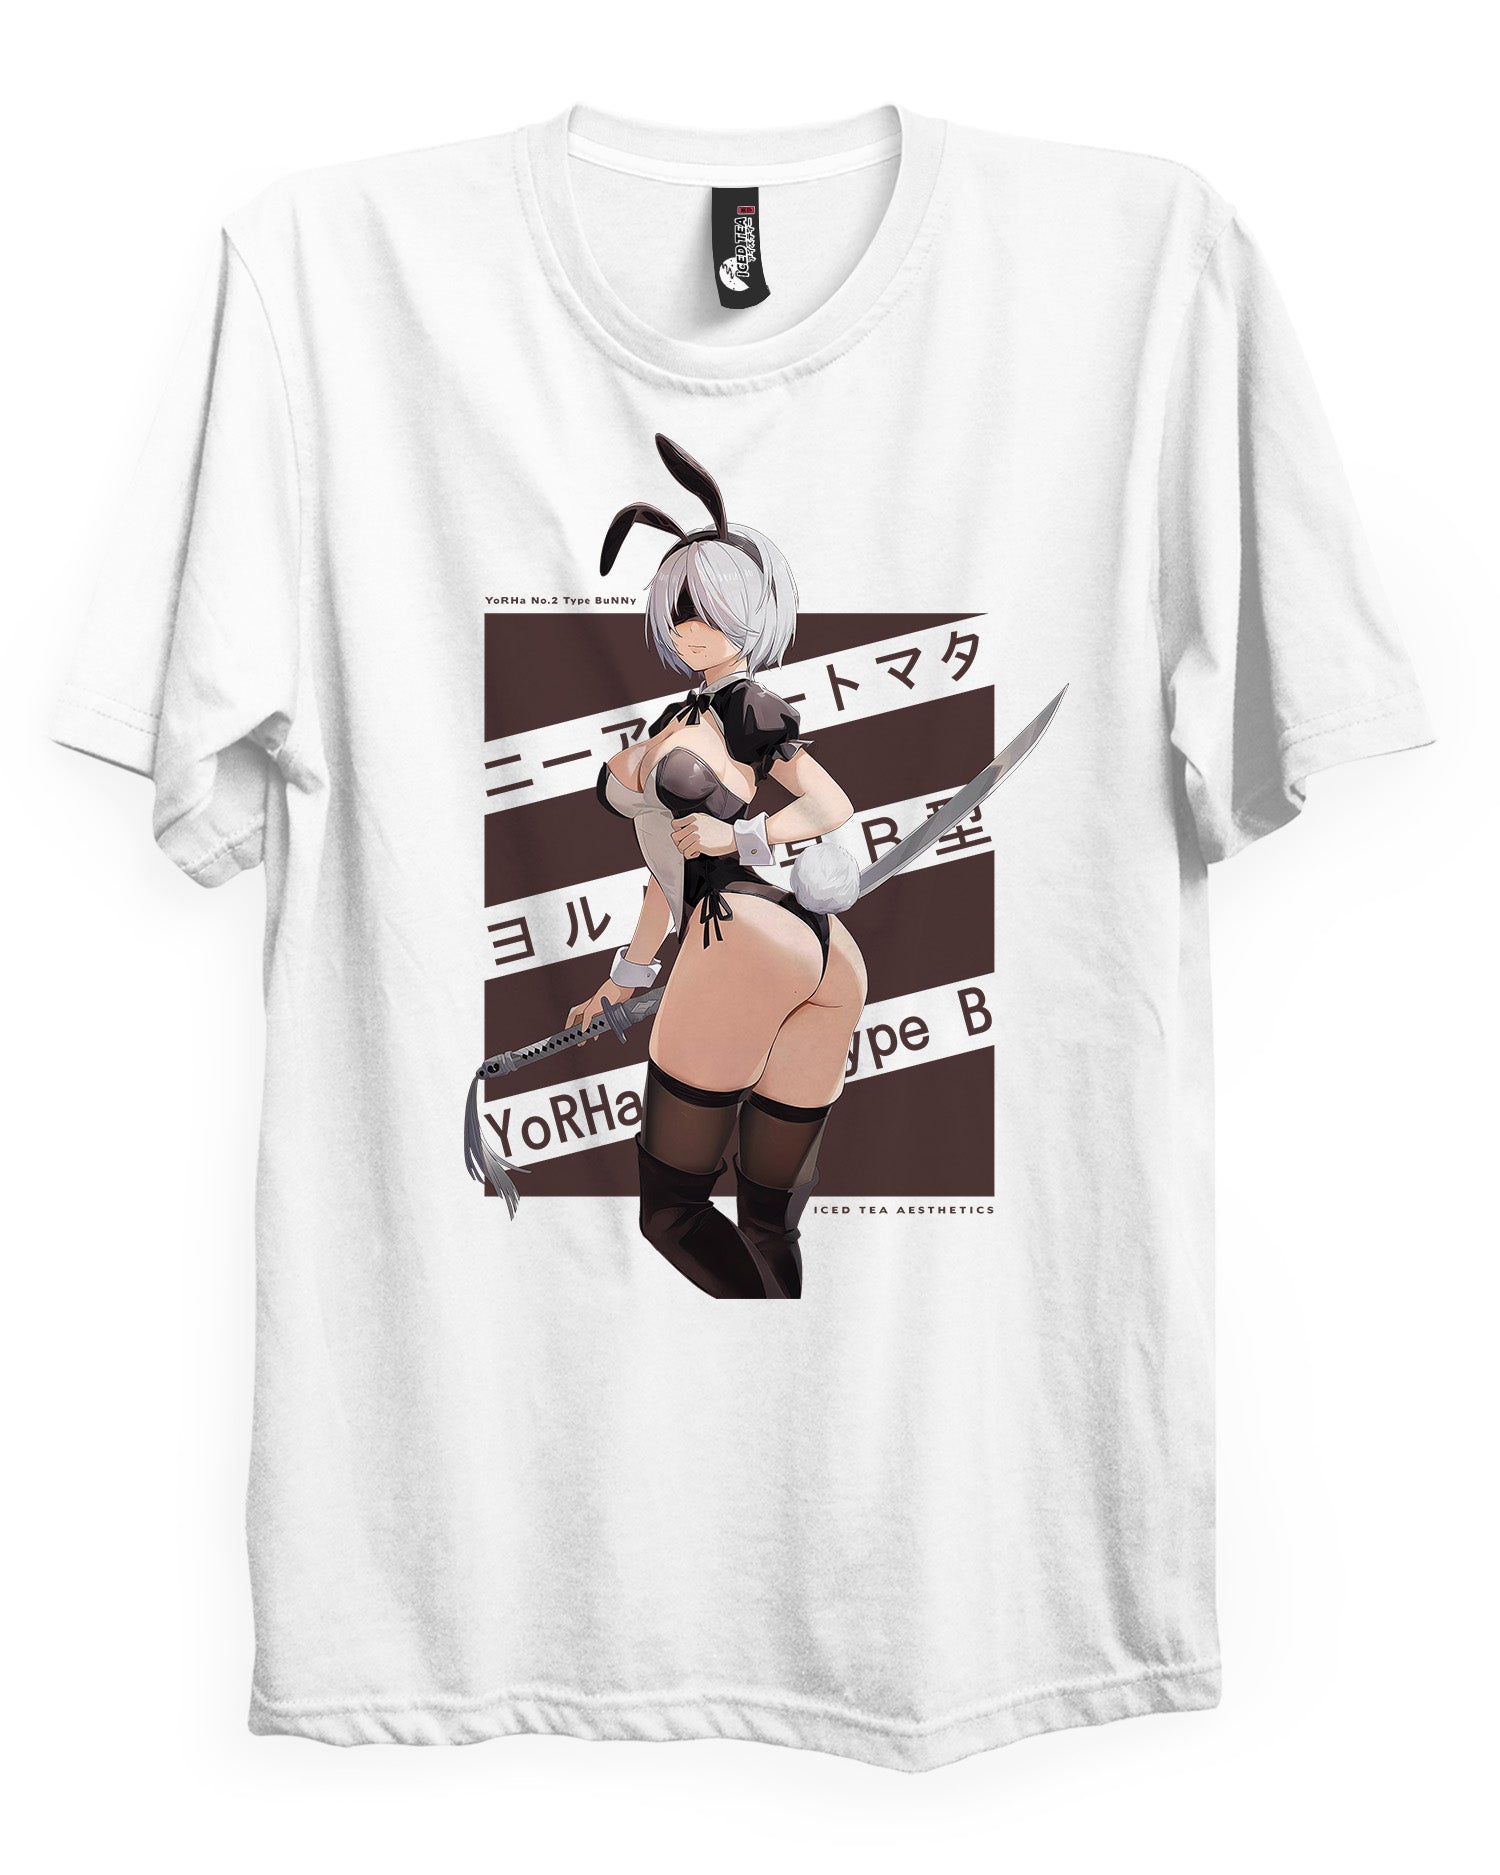 2B (Type Bunny) - T-Shirt